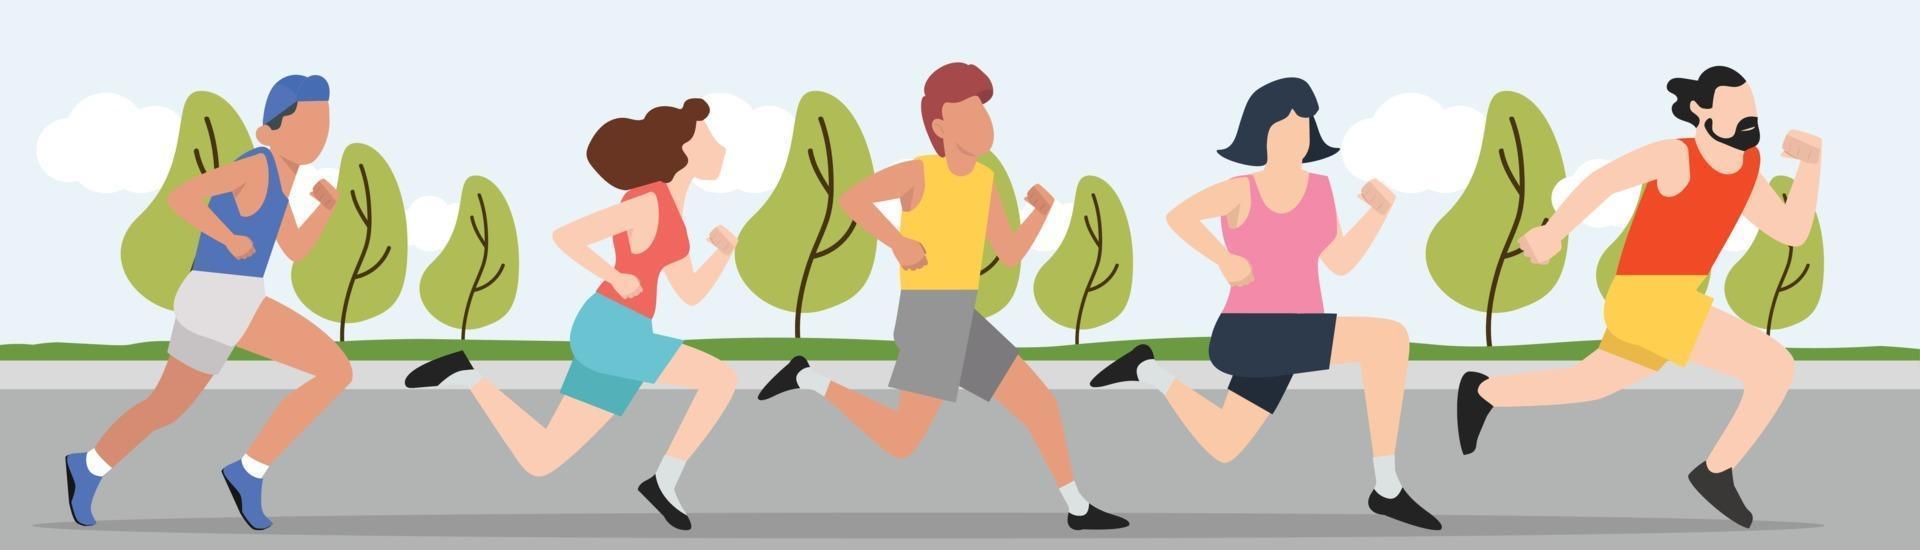 Runners, group of men and women running outdoors vector